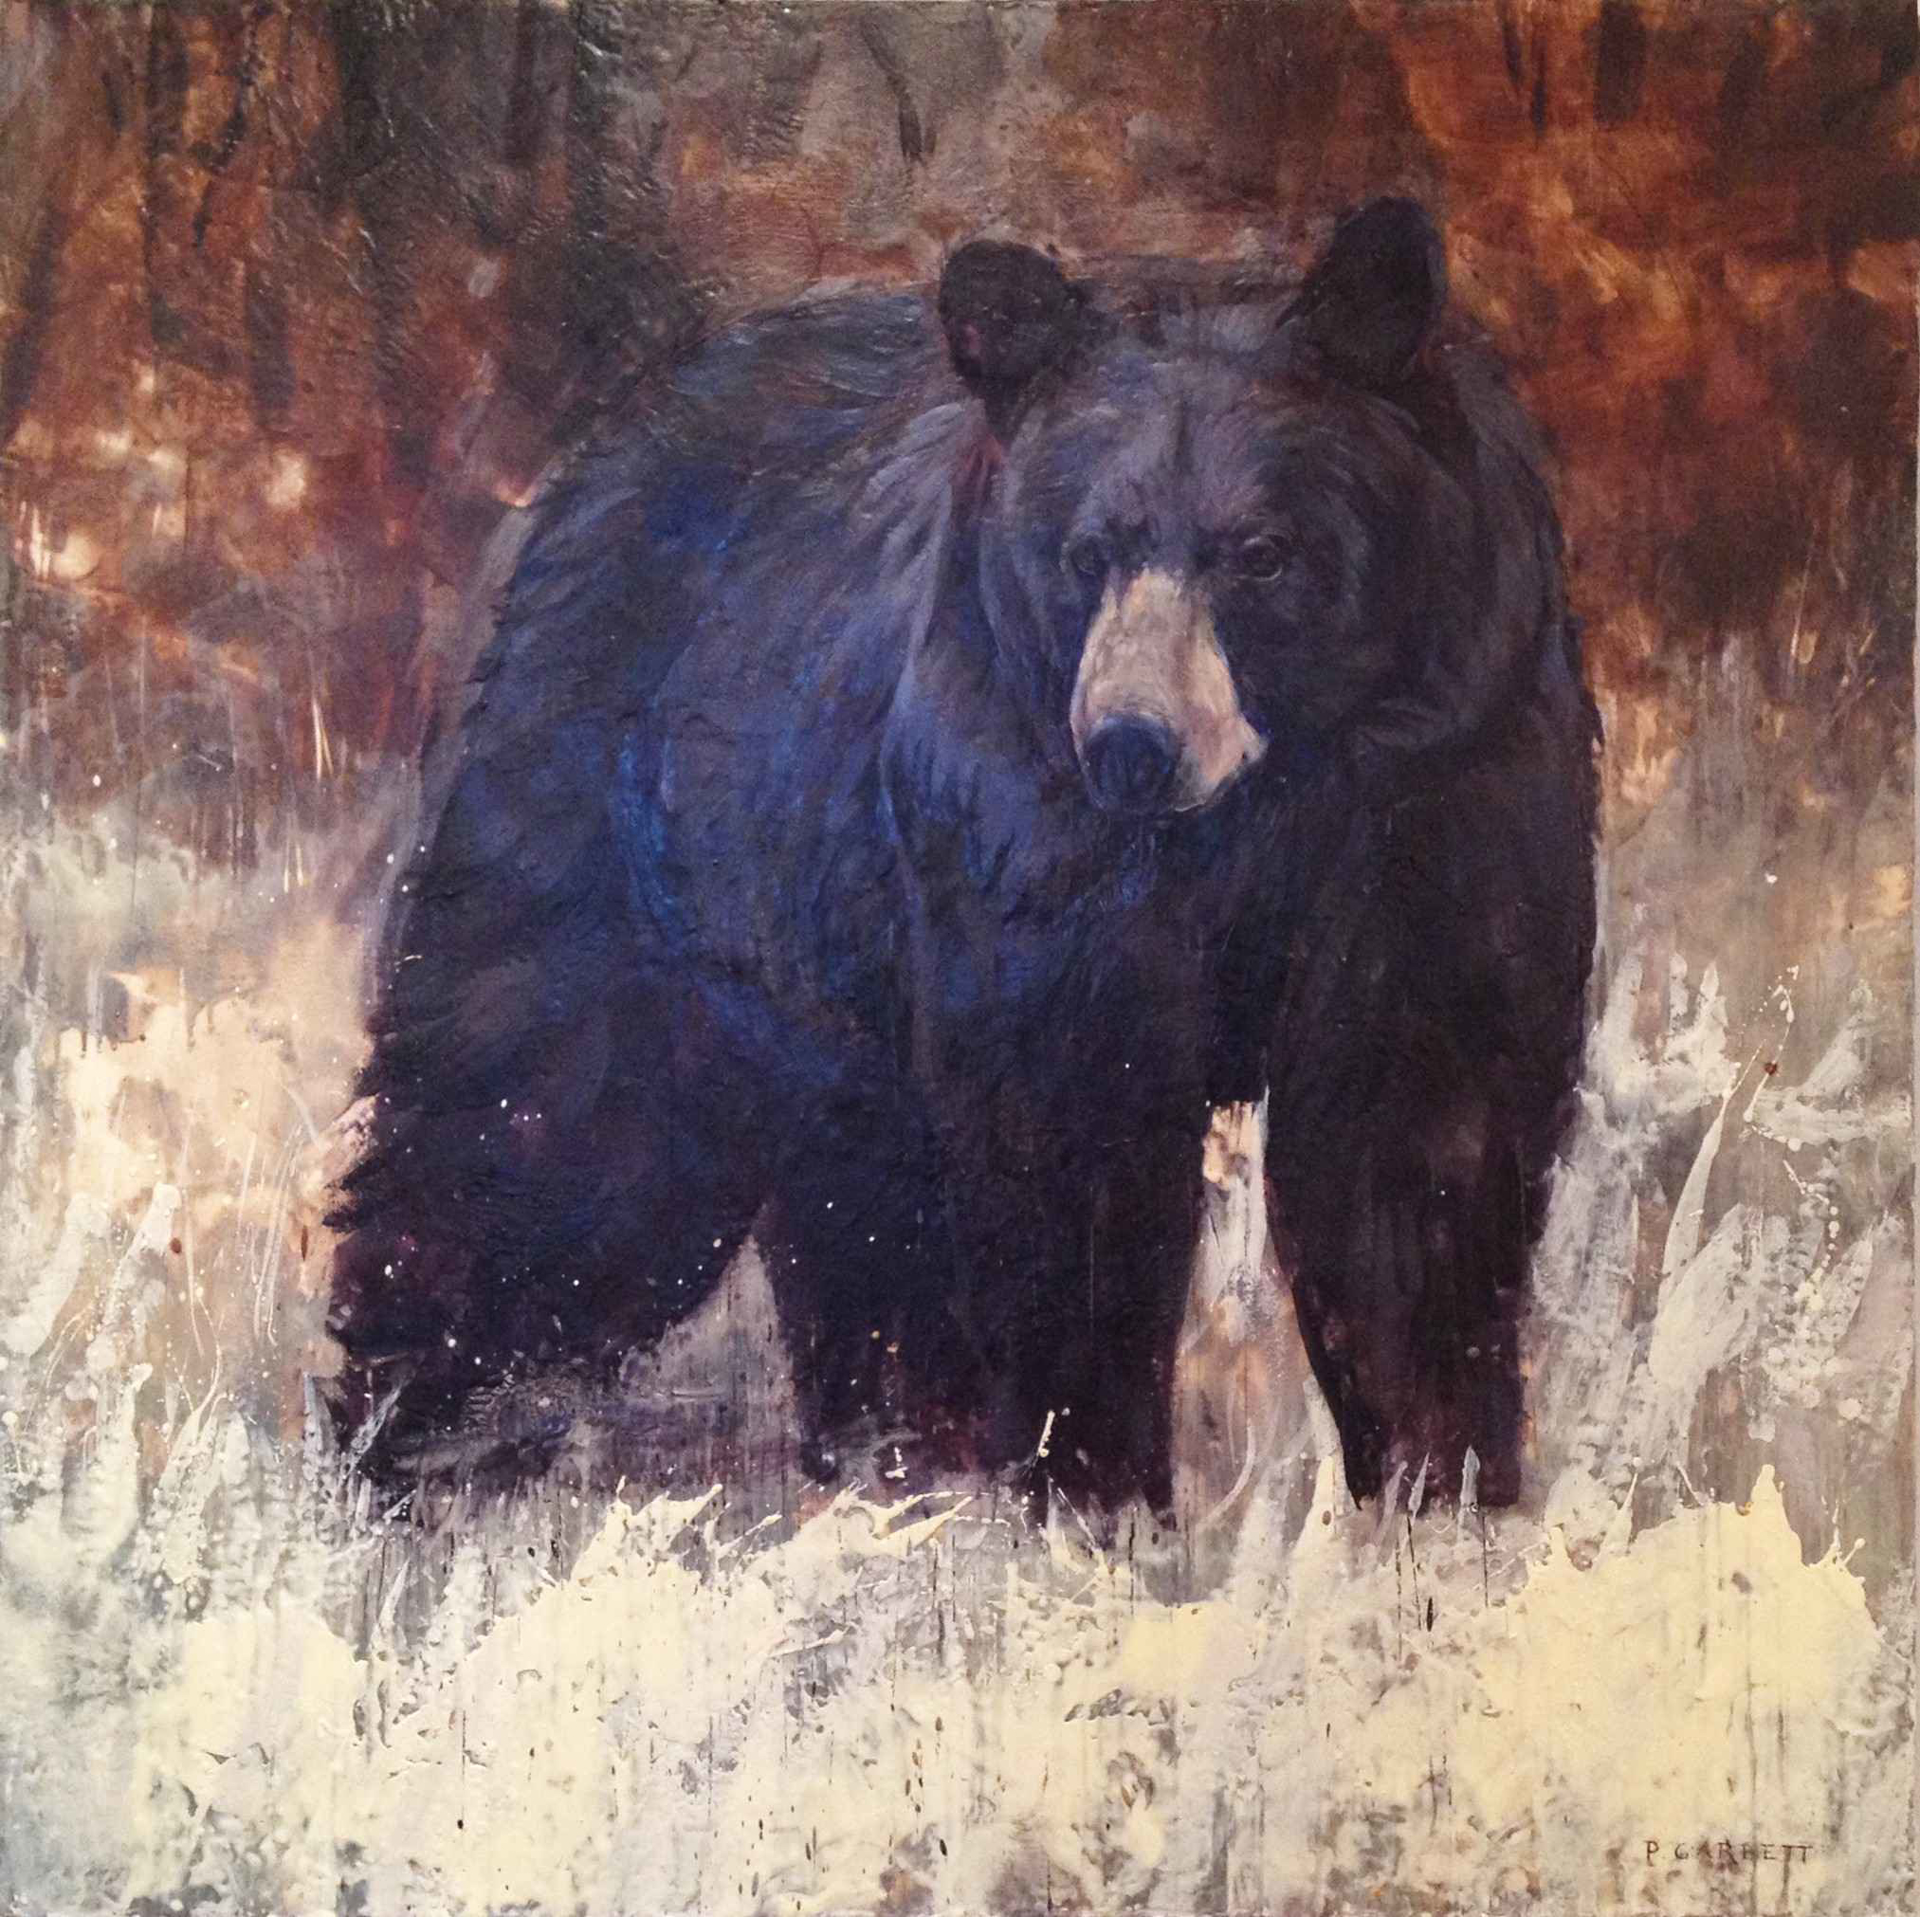 Black Bear #60-10 by Paul Garbett